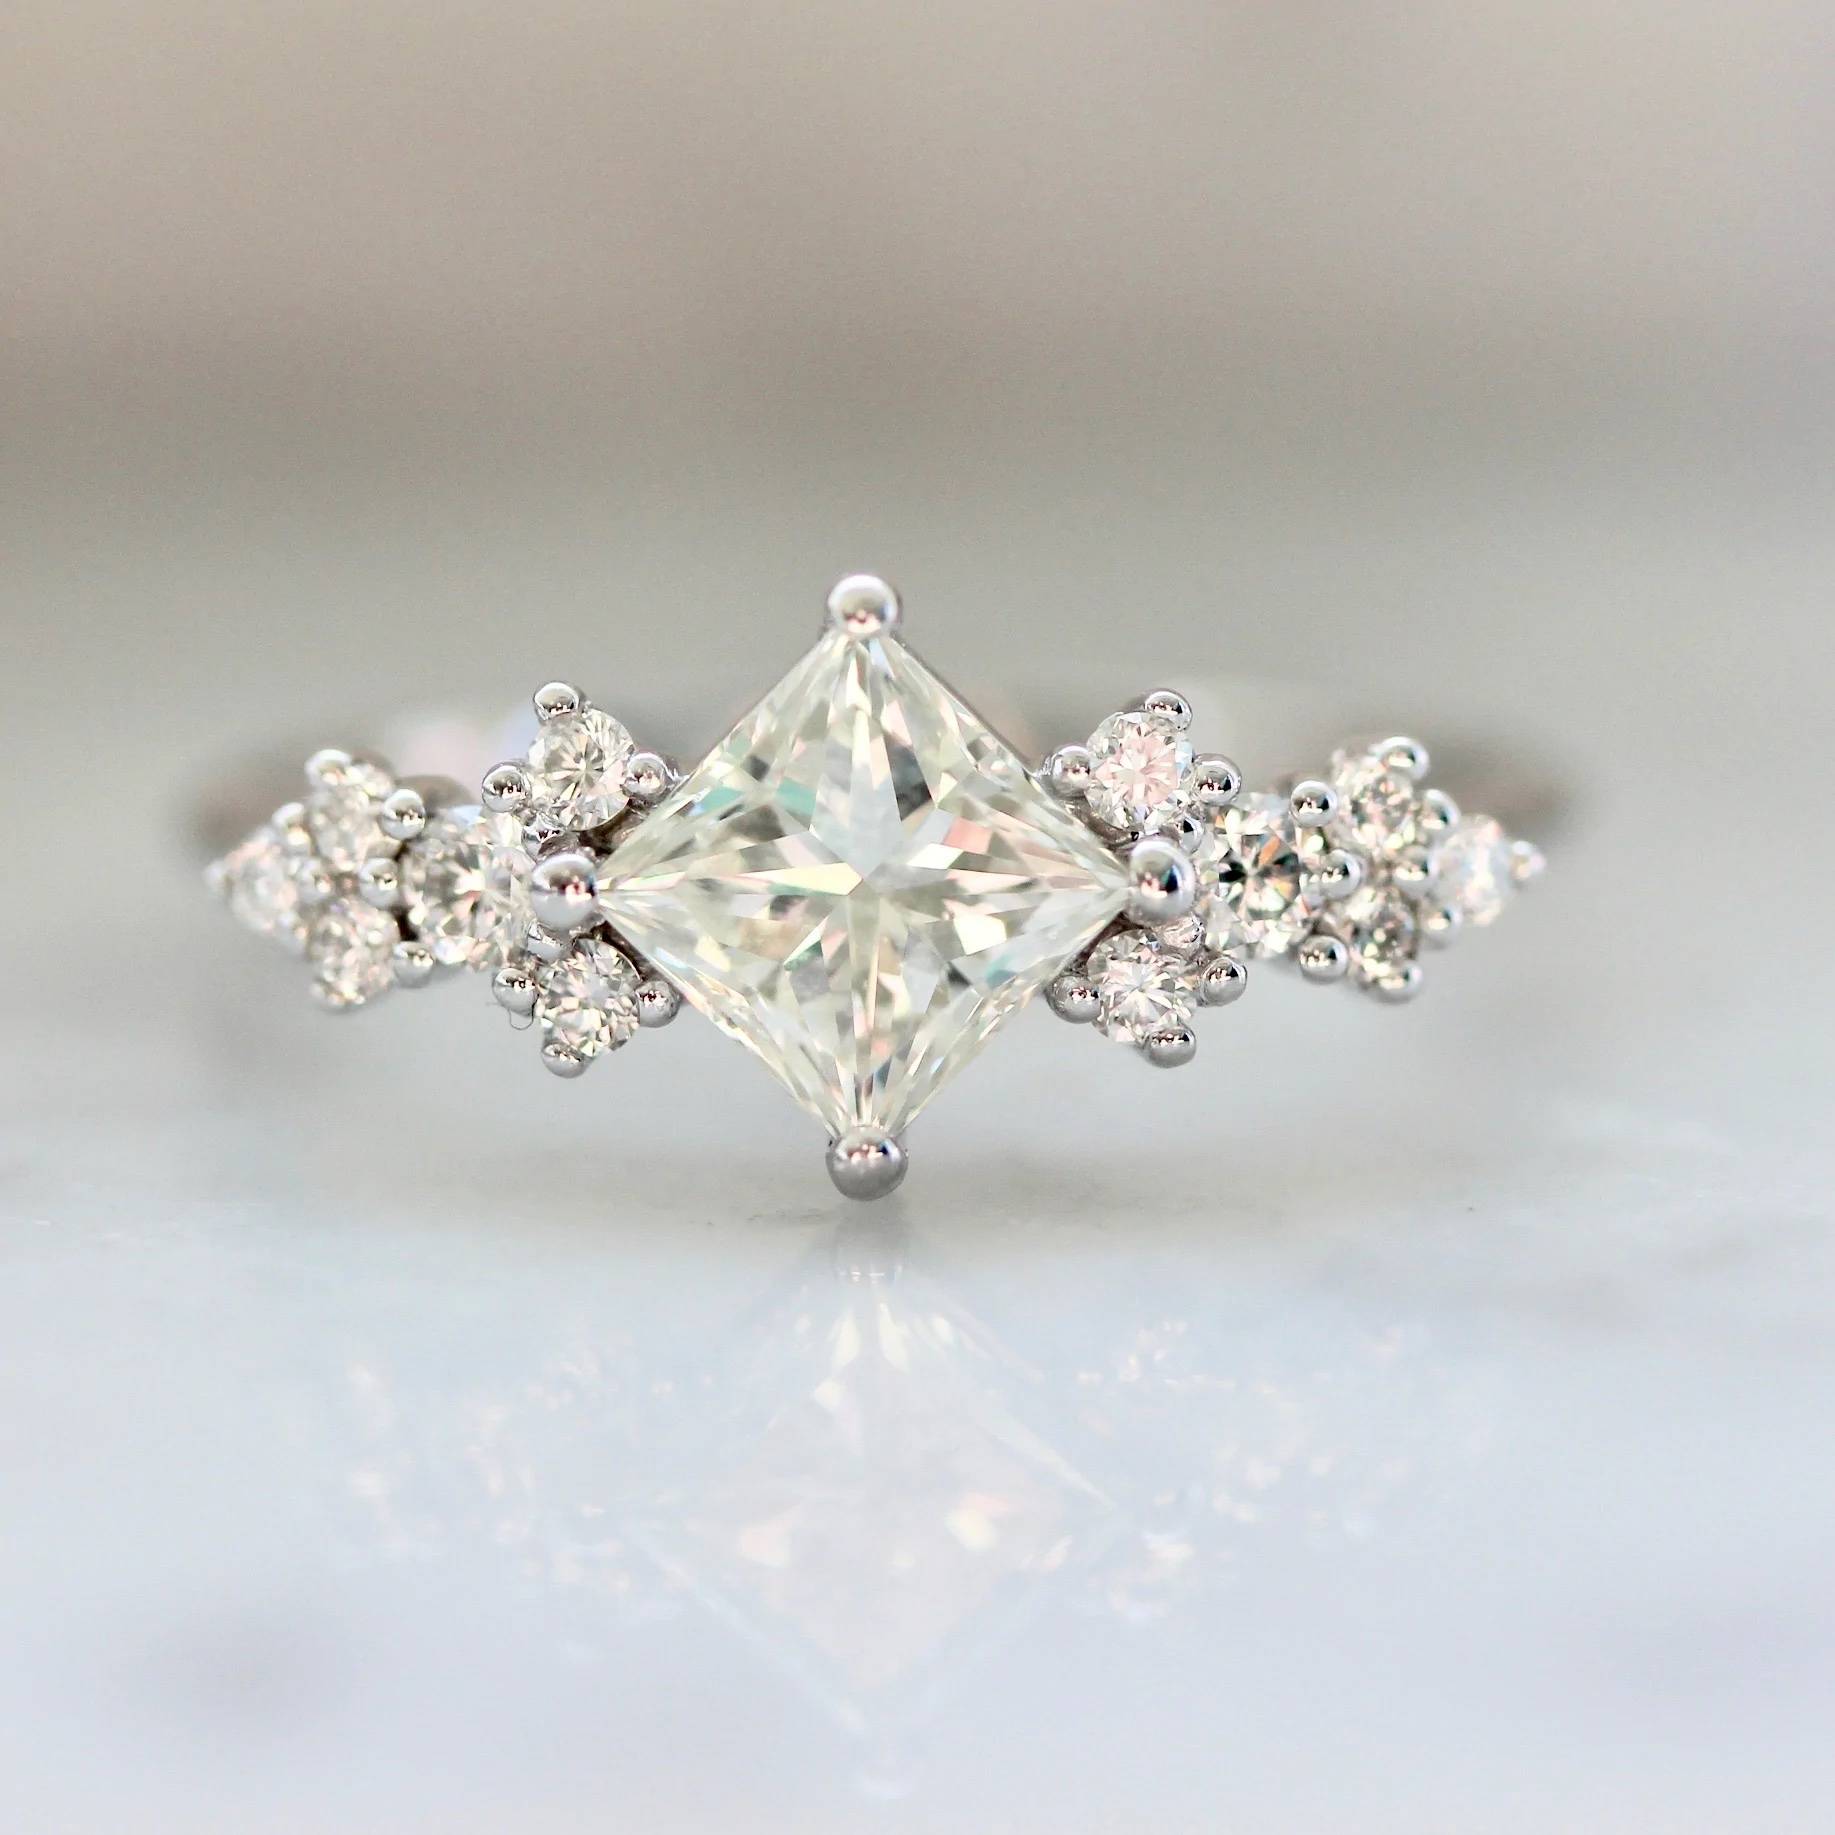 Princess Cut Diamonds Guide: Everything You Need to Know